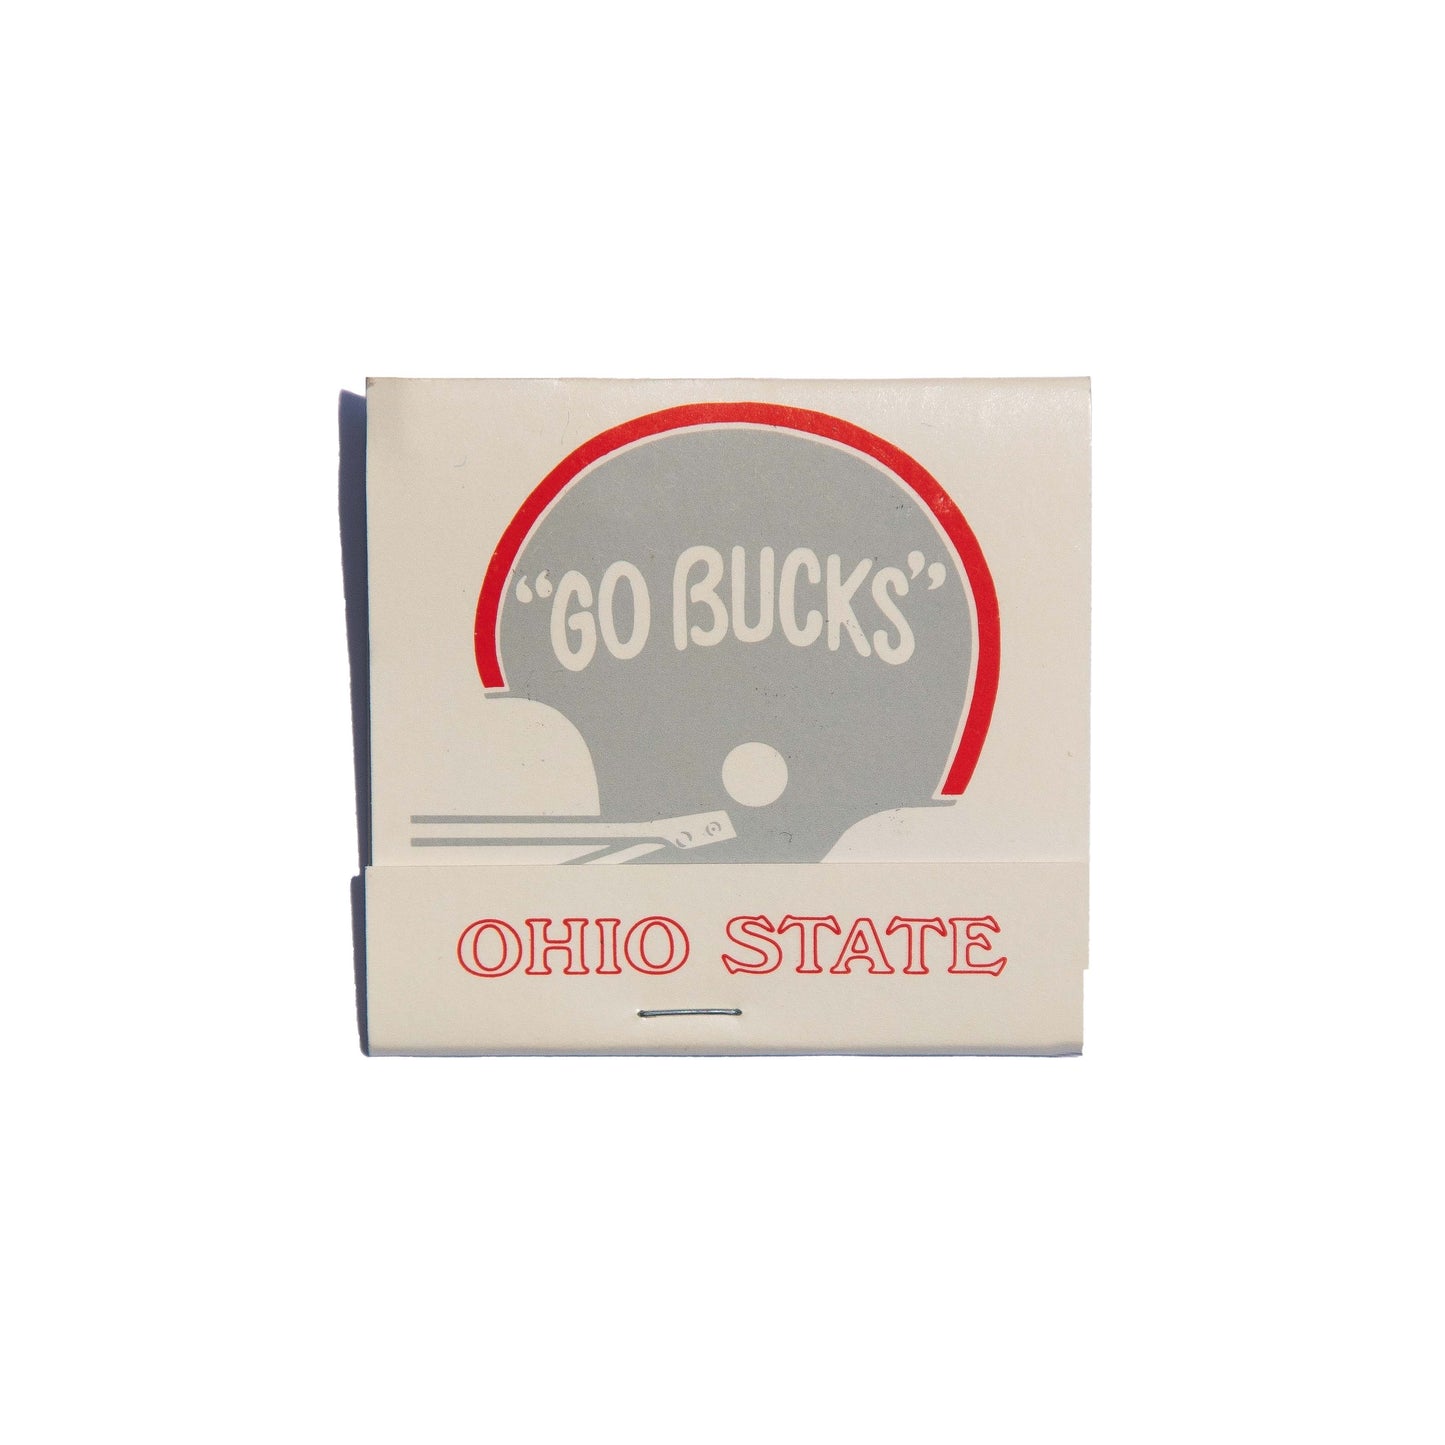 Ohio State (Go Bucks)